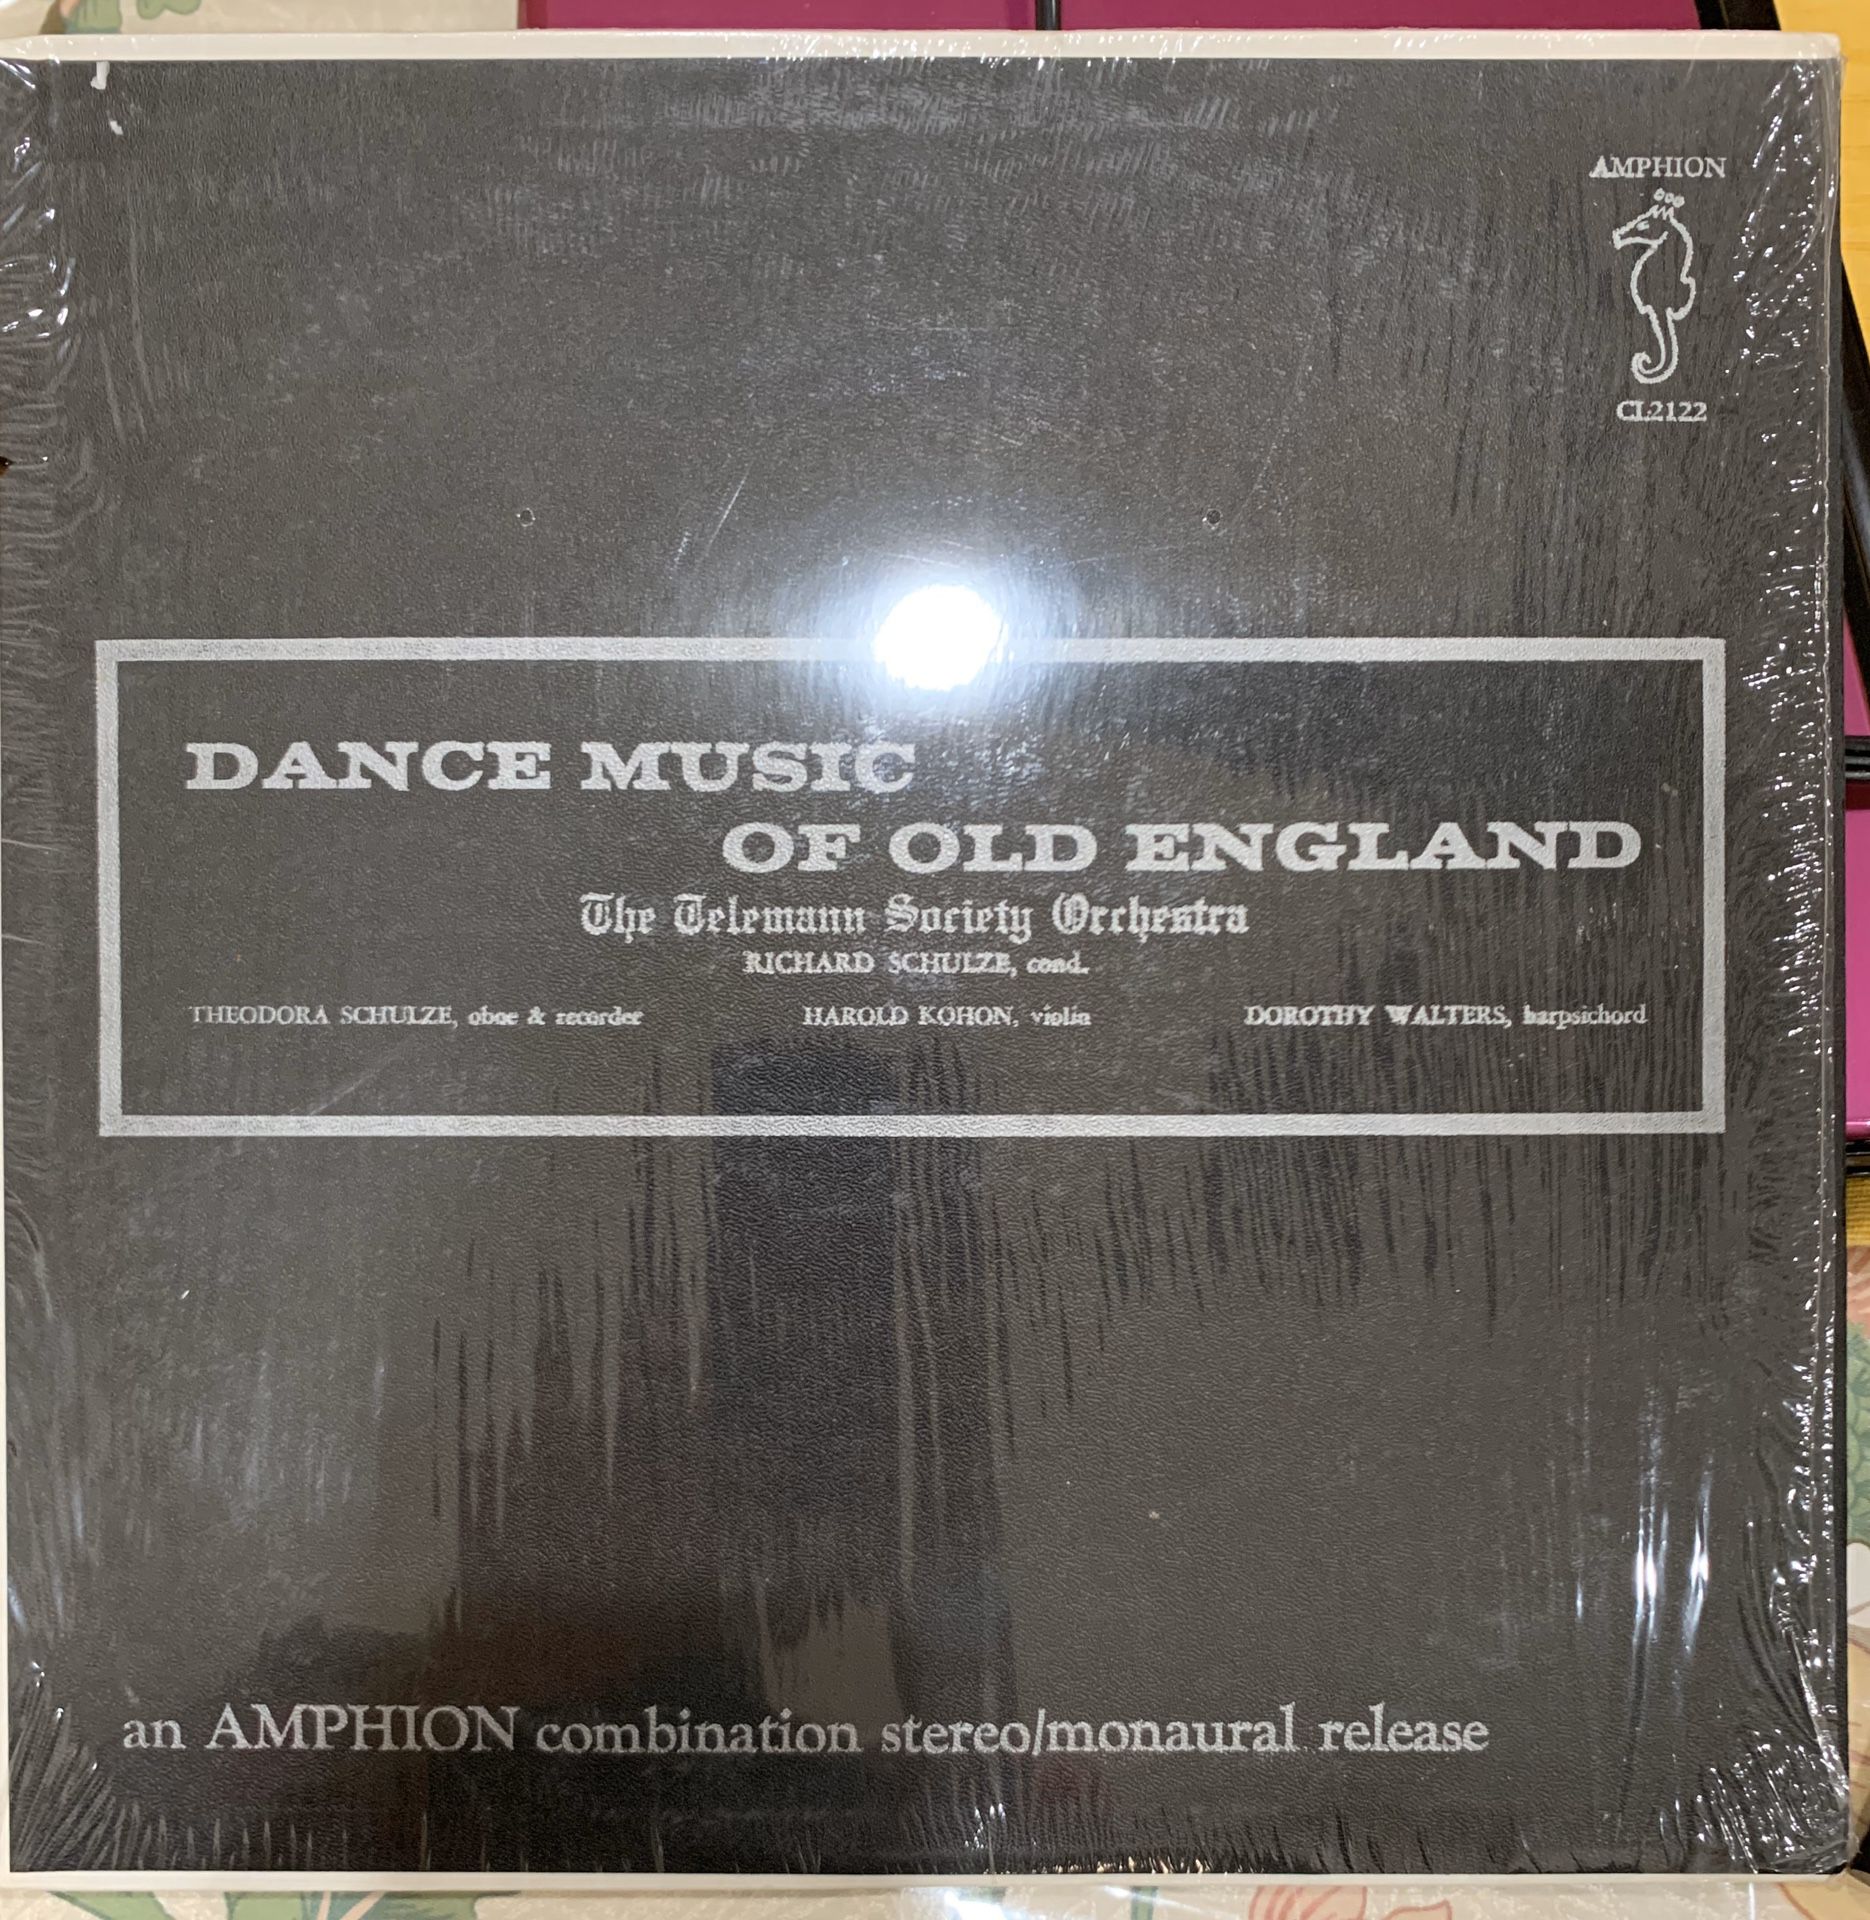 Dance Music of Old England by Richard Schulze vinyl